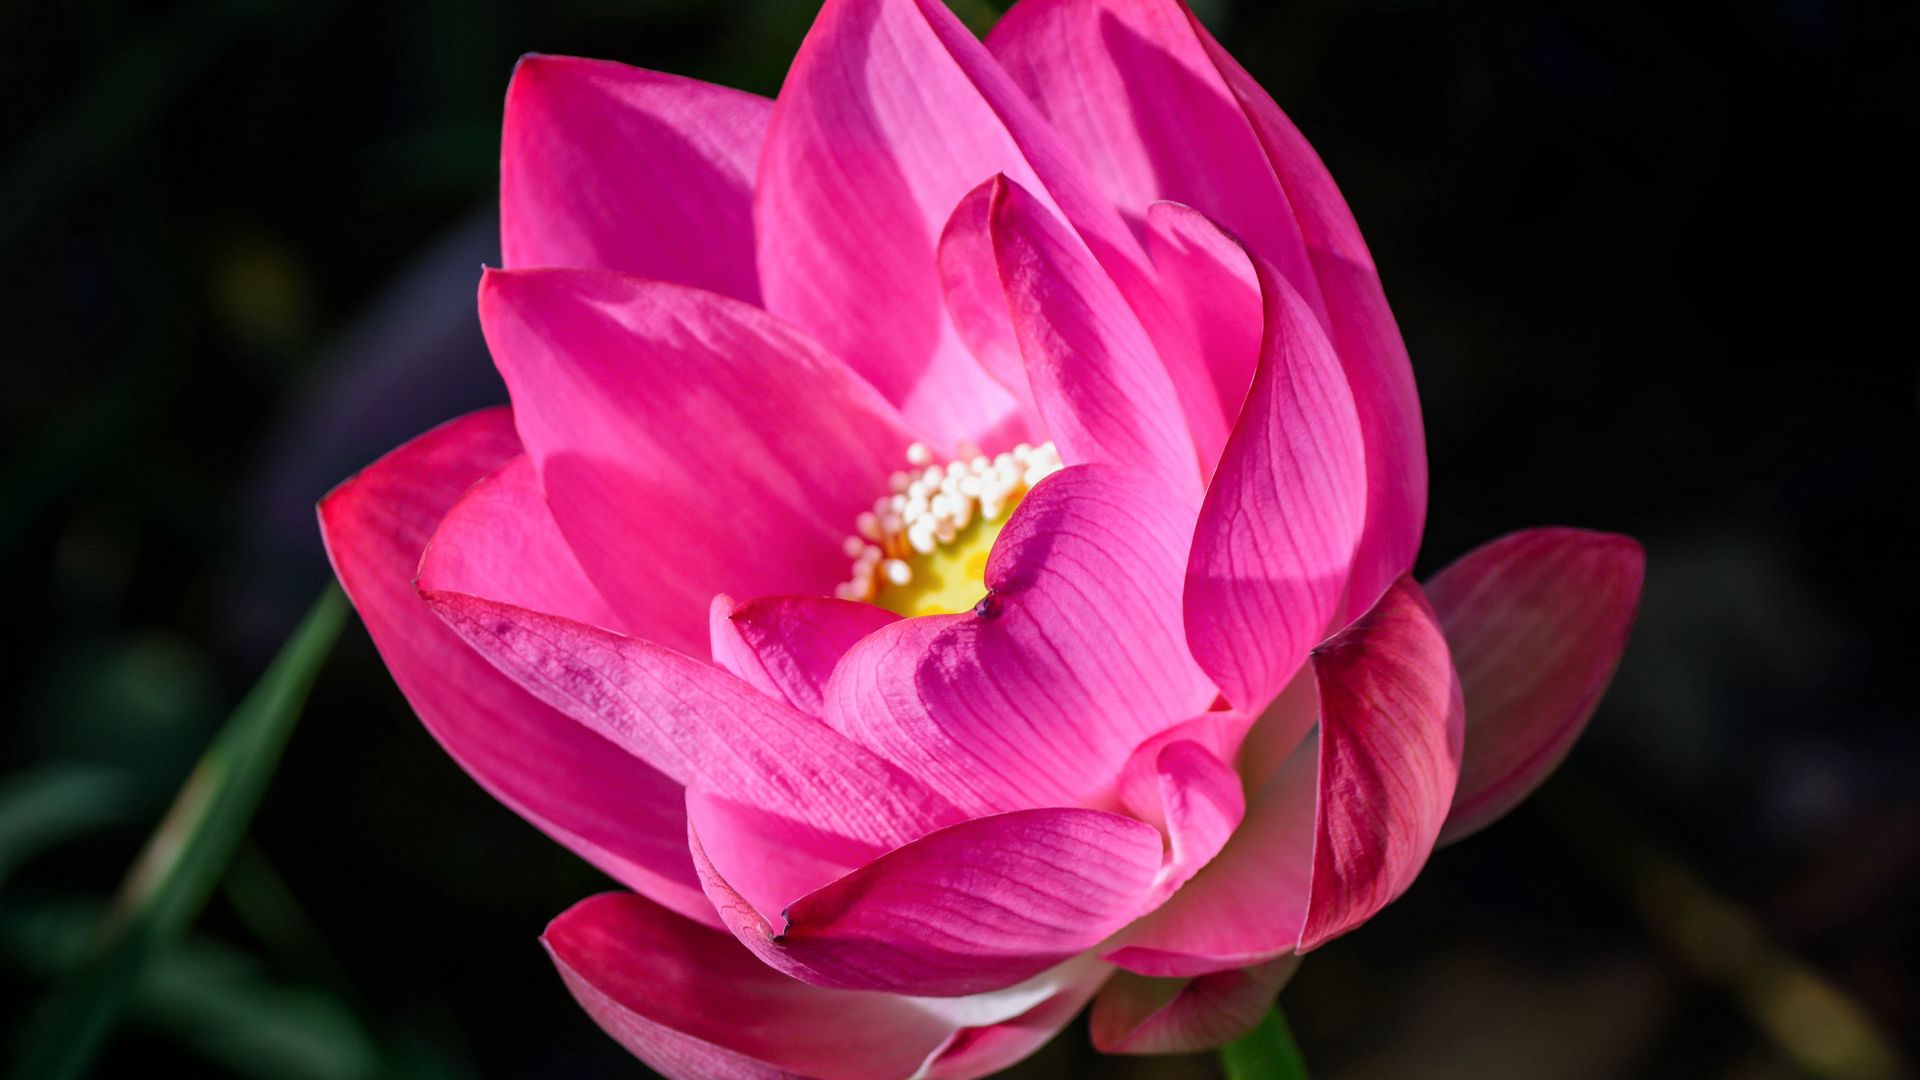 Download wallpaper 1920x1080 lotus, flower, pink, petals, bud, blur full hd,  hdtv, fhd, 1080p hd background